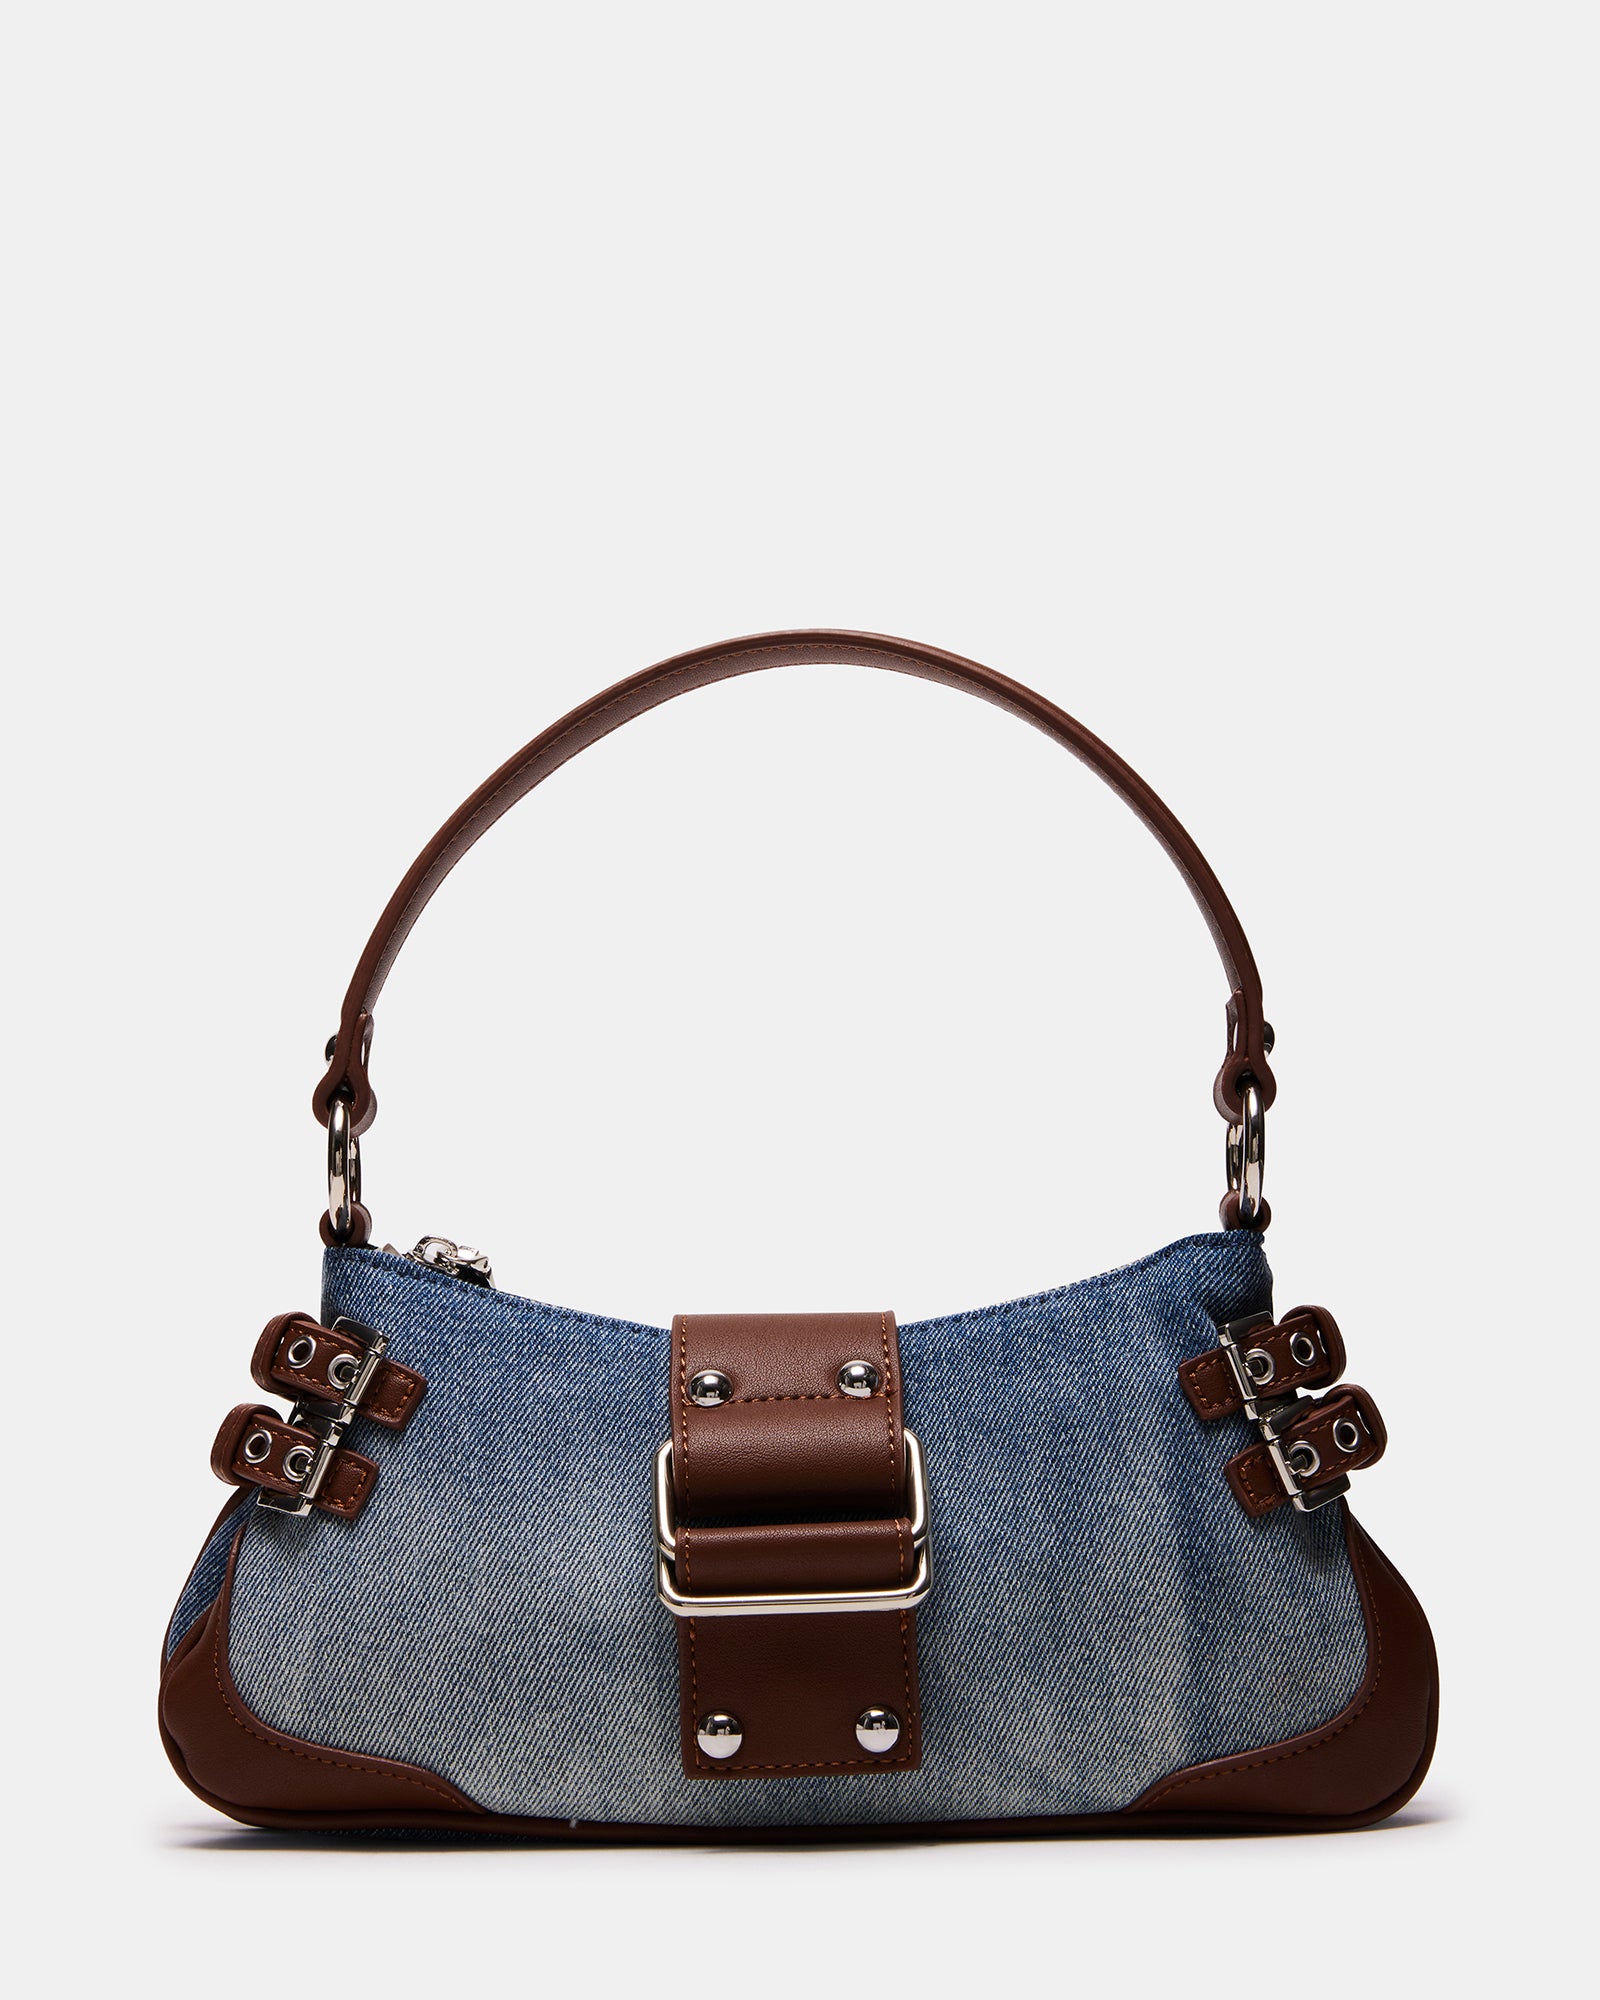 Steve Madden Adjustable Shoulder Handbags | Mercari